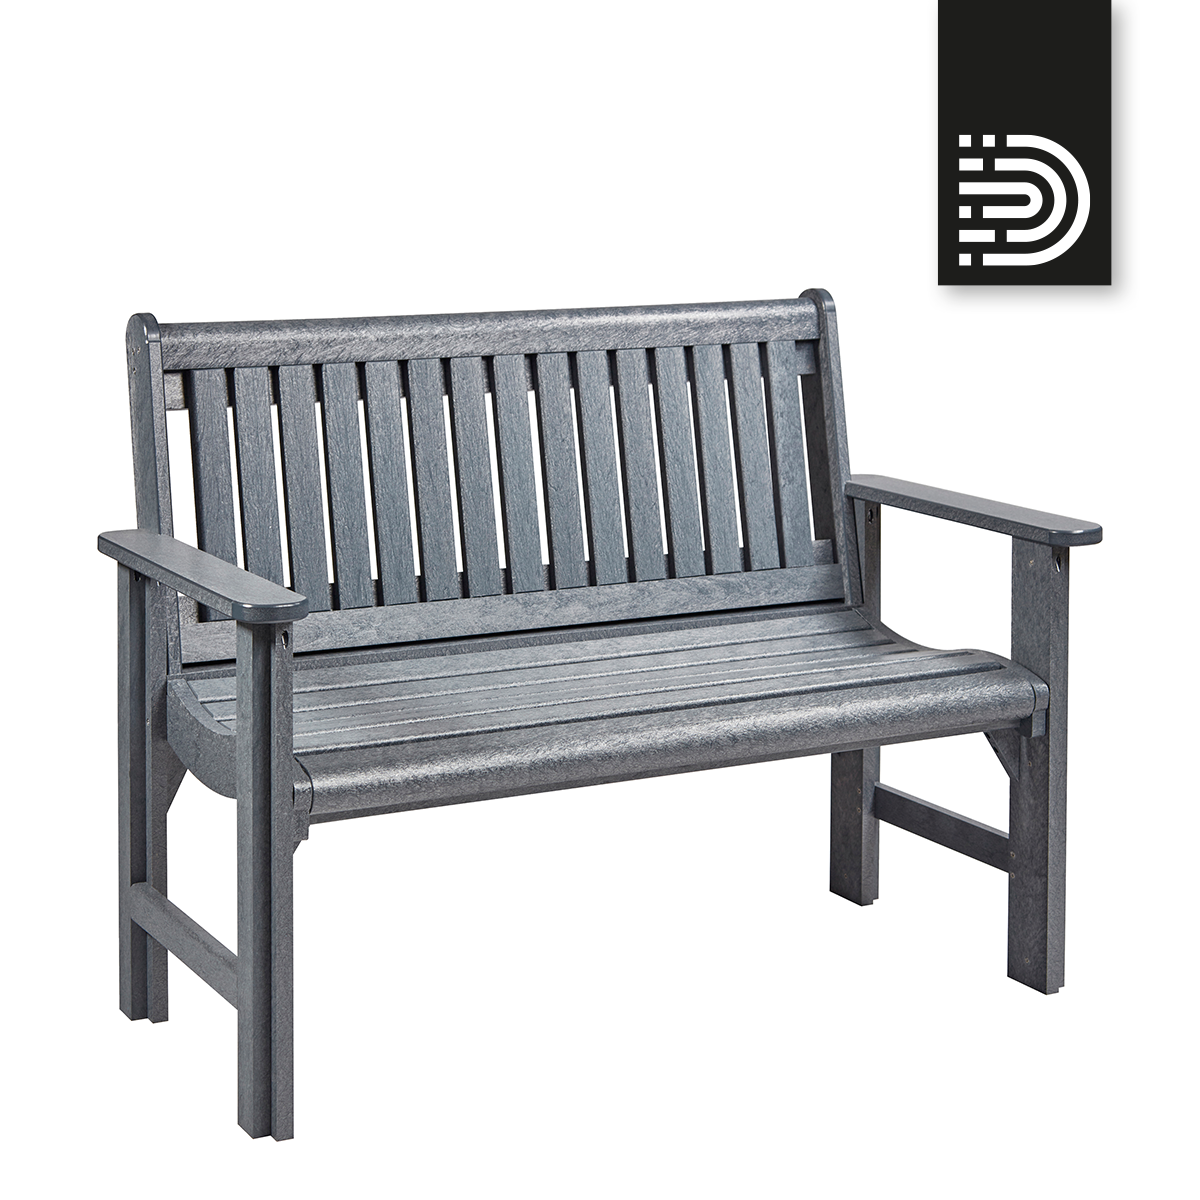 B01 4' Premium Garden Bench- slate grey 18